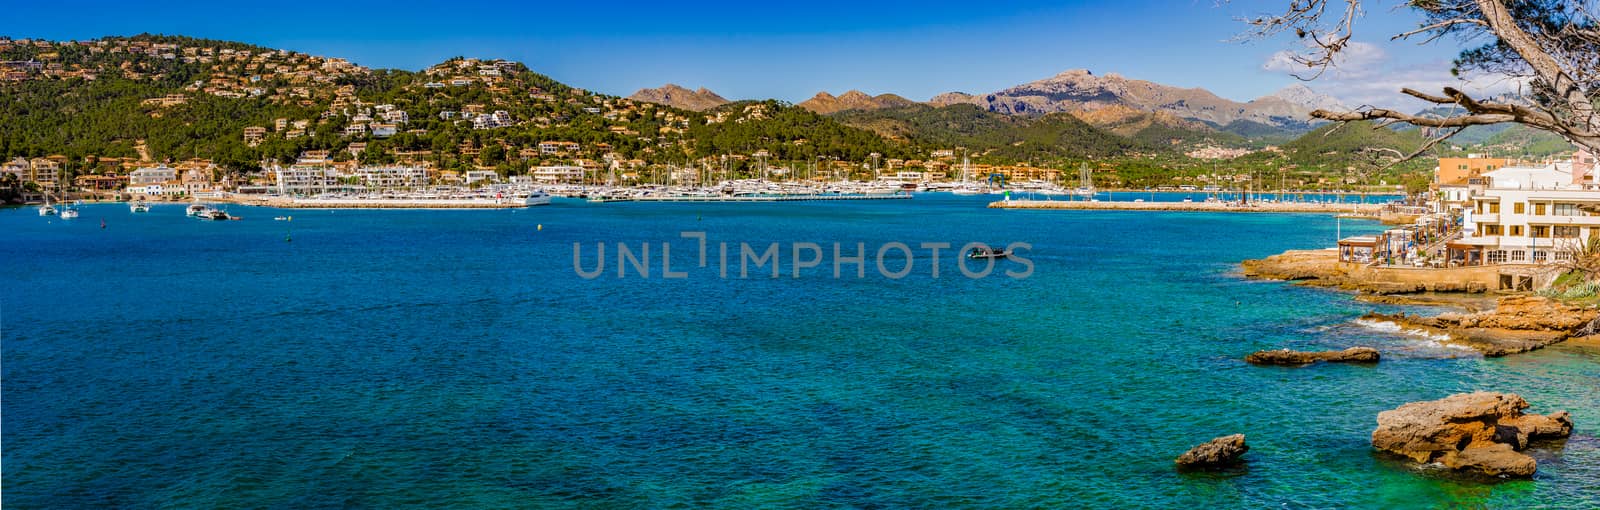 Panorama view of Port de Andratx, beautiful harbor on Majorca island, Spain Mediterranean Sea by Vulcano